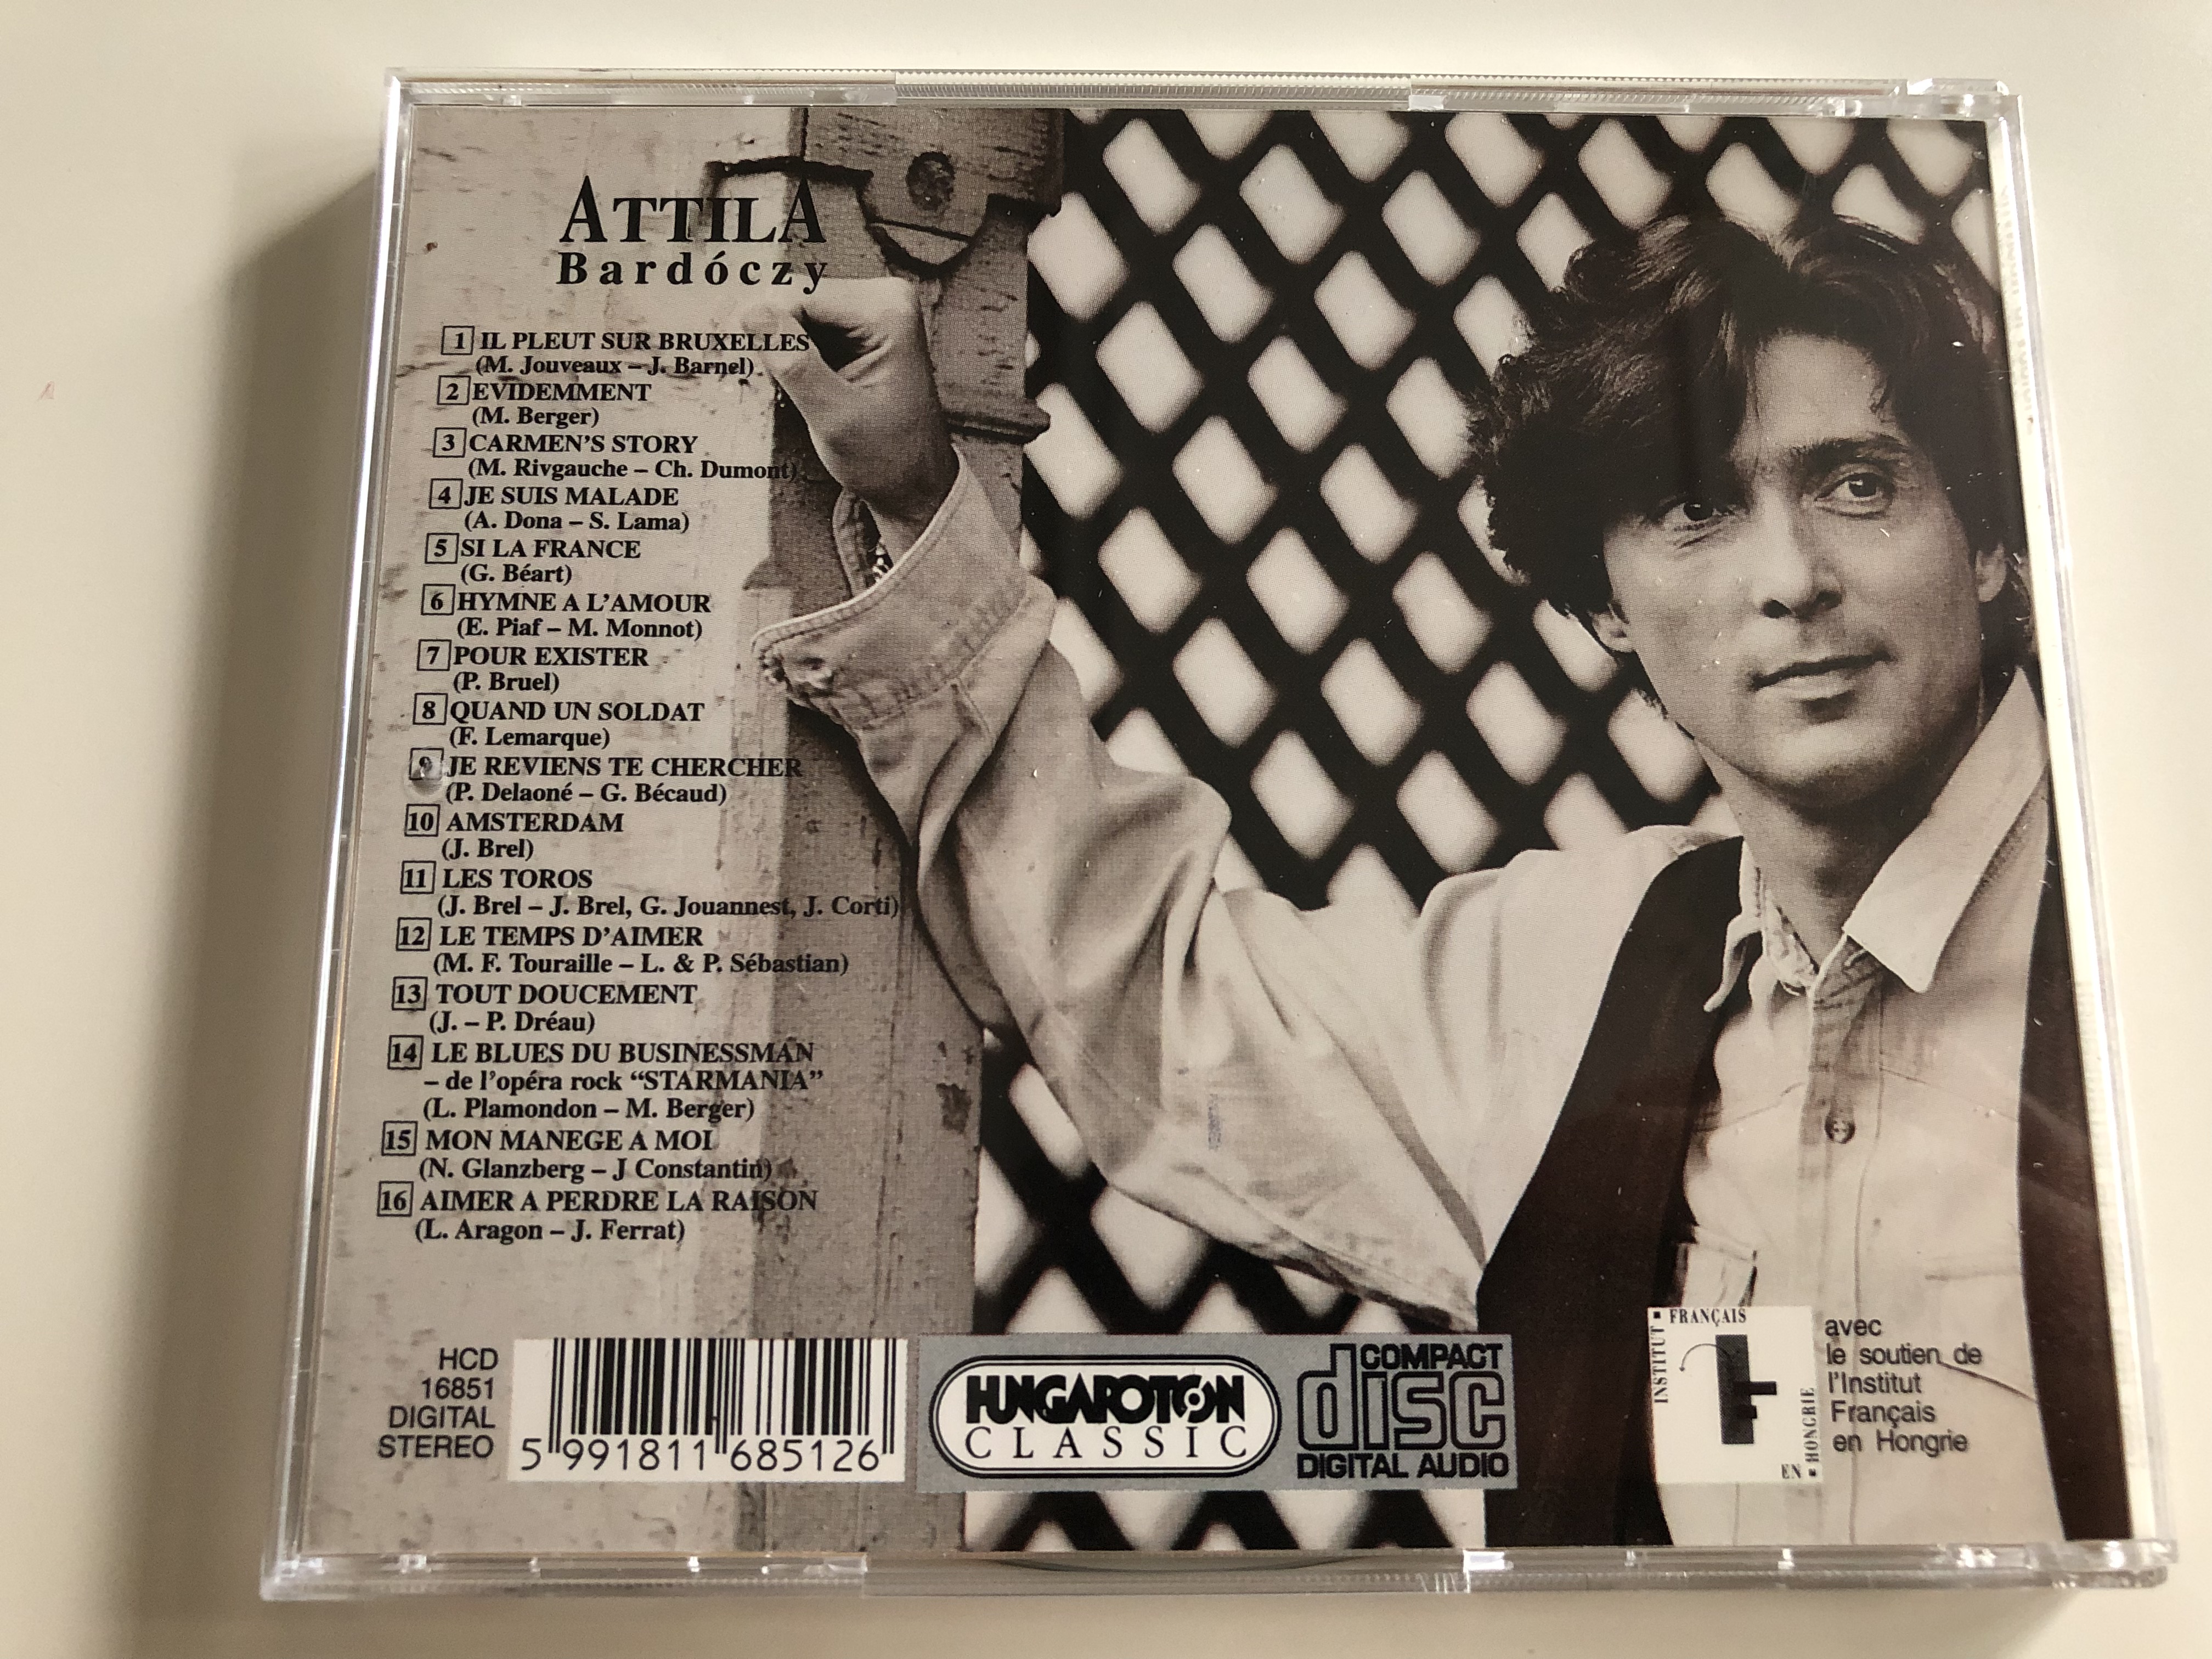 attila-b-rd-czy-chanson-classique-hungaroton-classic-audio-cd-1996-hcd-16851-7-.jpg